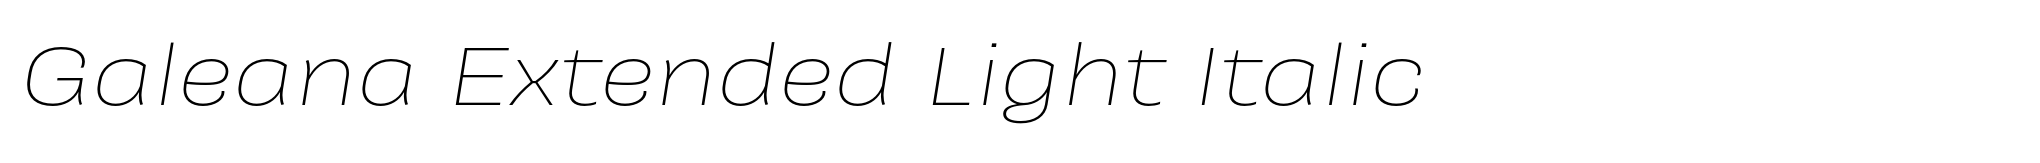 Galeana Extended Light Italic image